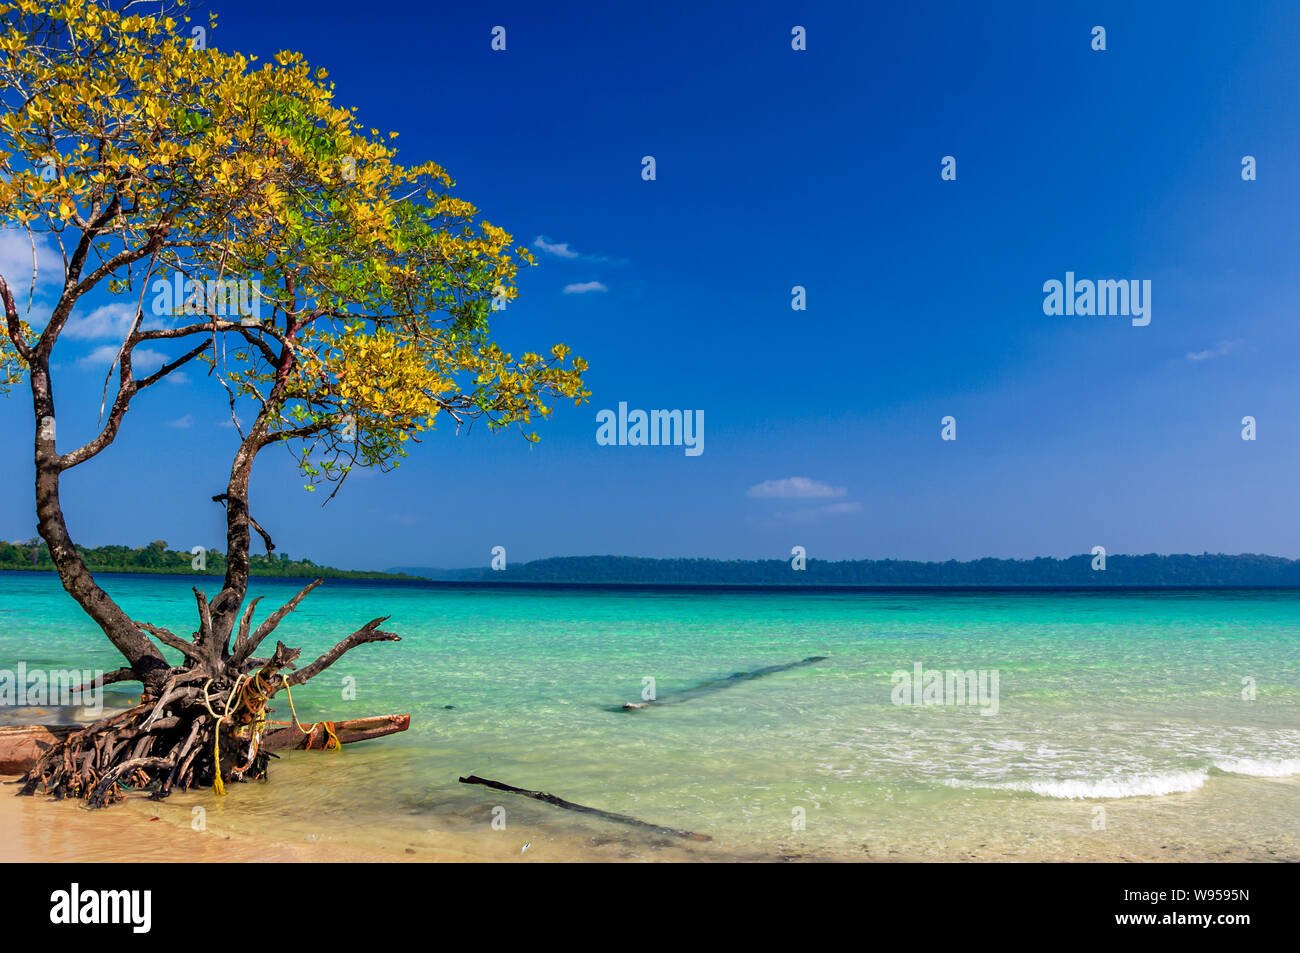 Havelock island, Andaman et Nicobar, Inde Banque D'Images